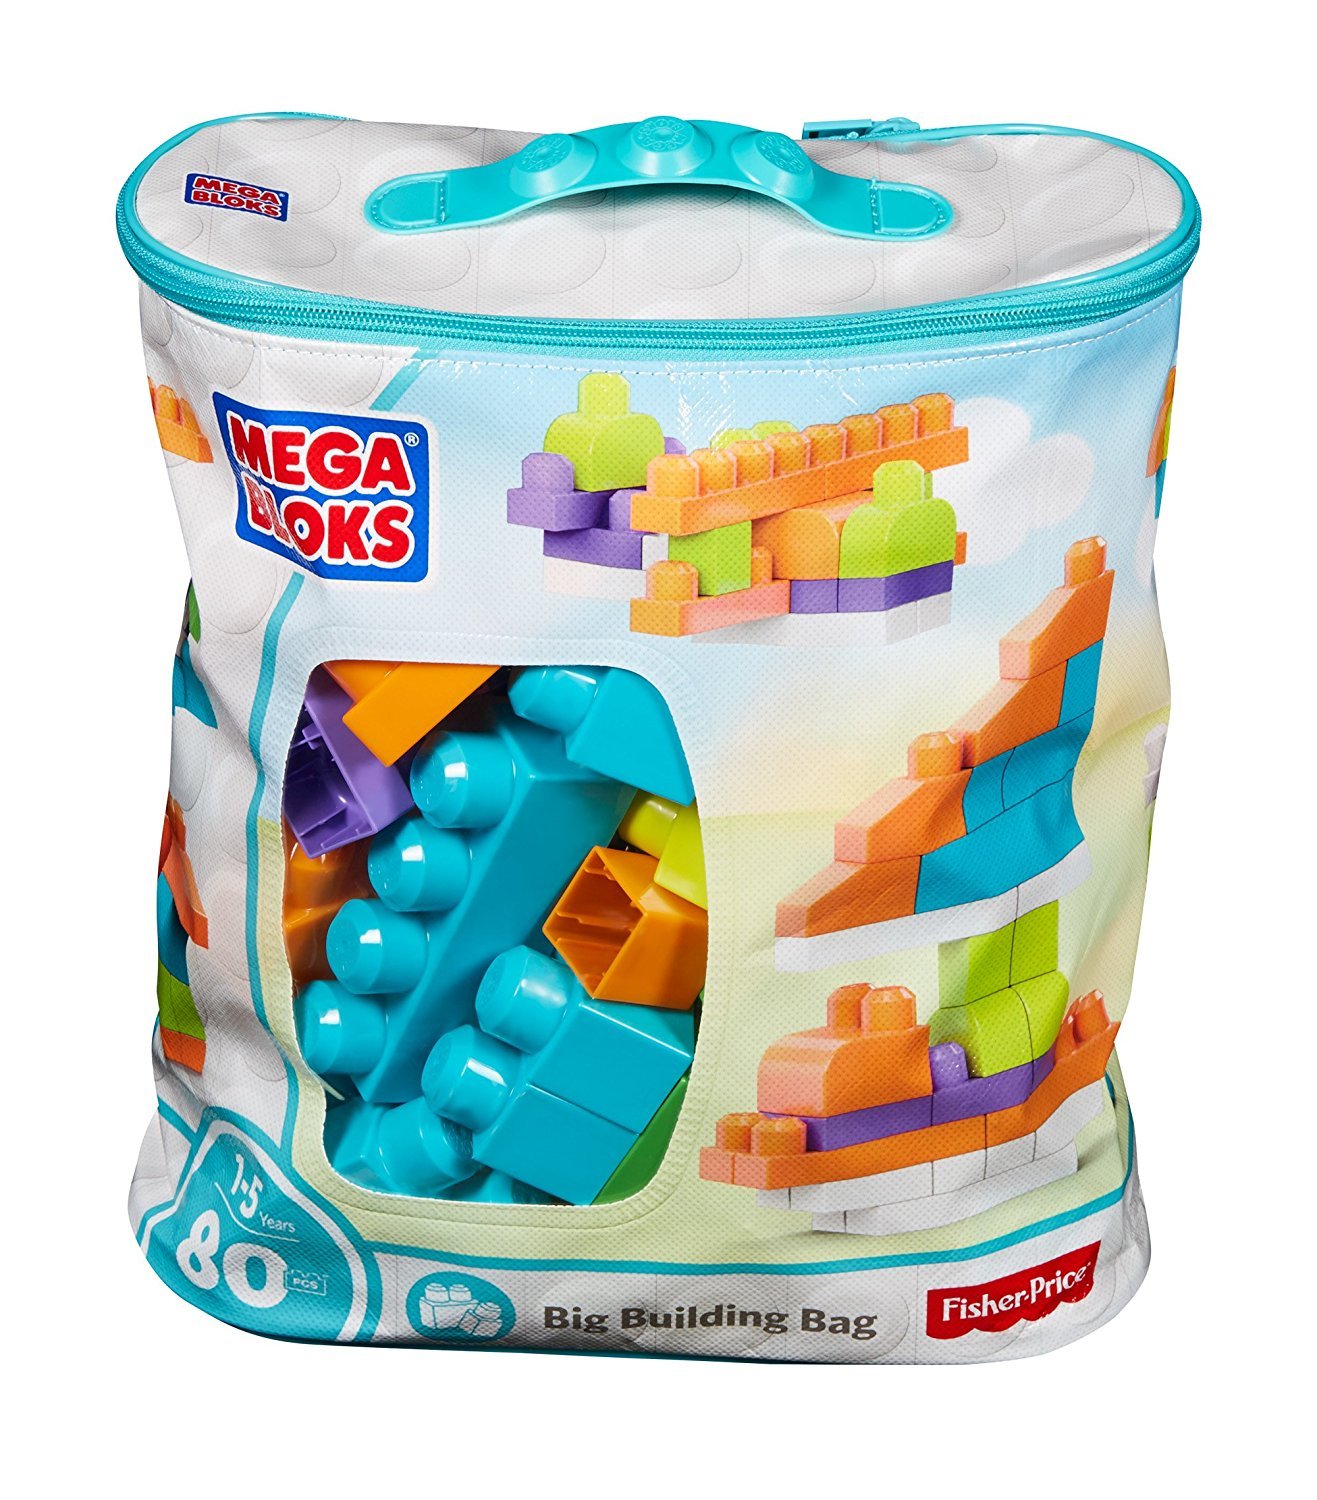 Mega Bloks Big Building Bag, 1 - 5 years, 80 pieces